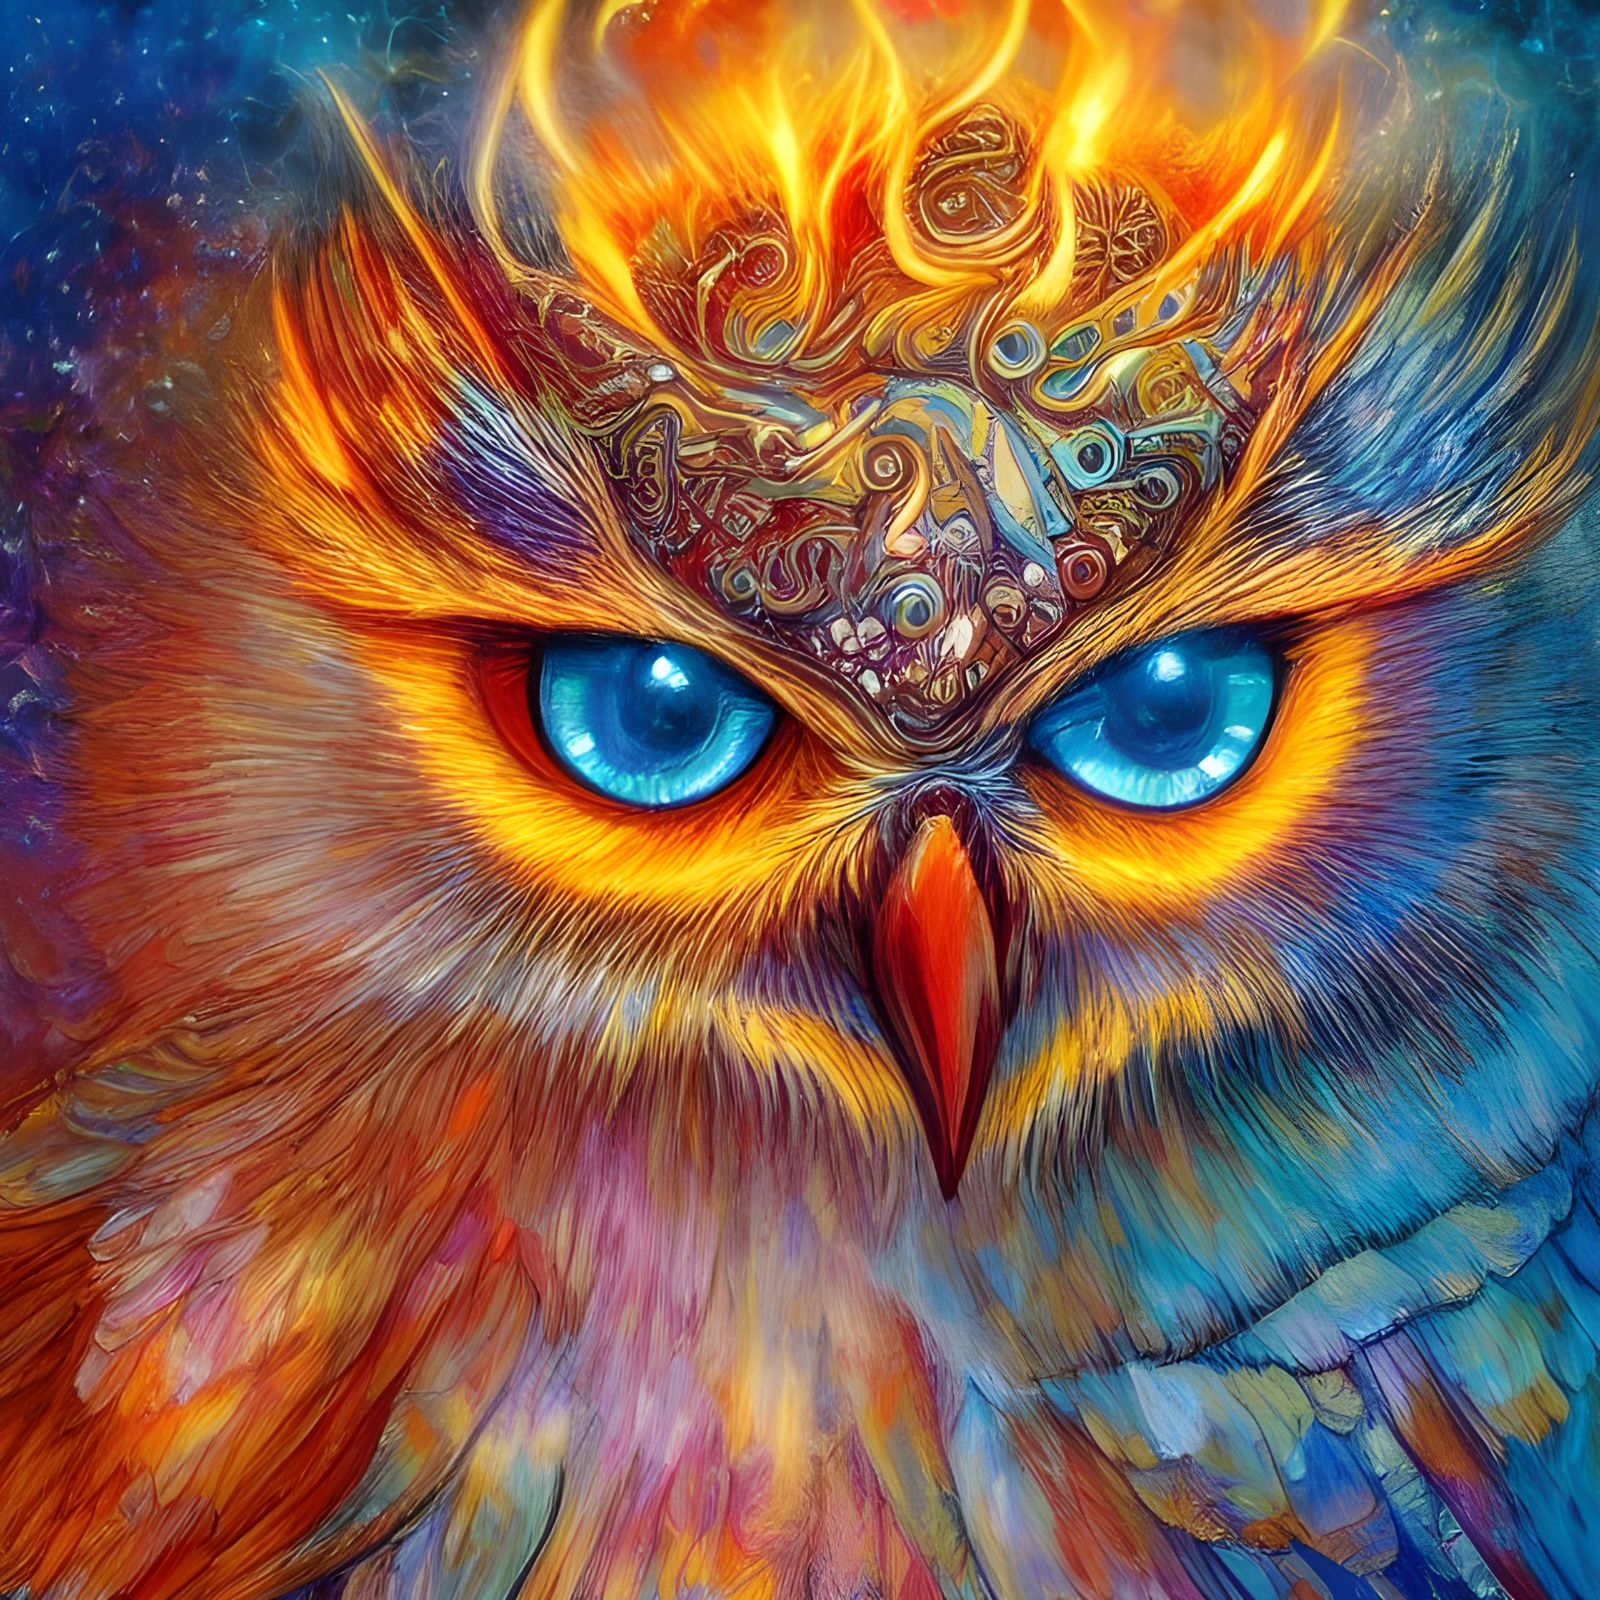 Masterpiece, Owl on fire